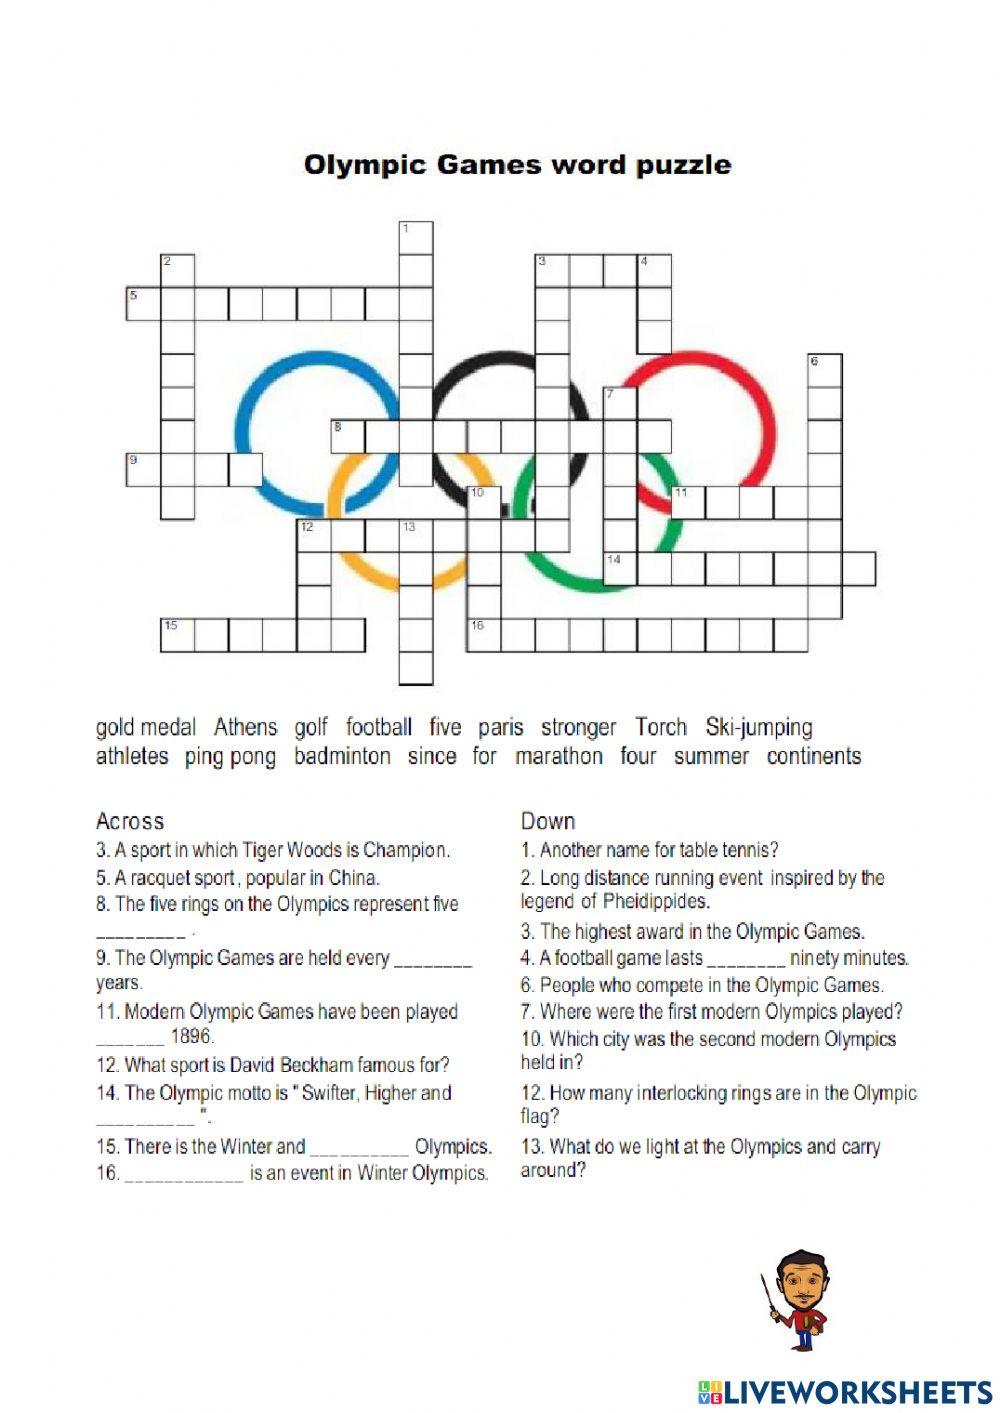 Olympic Games Crossword